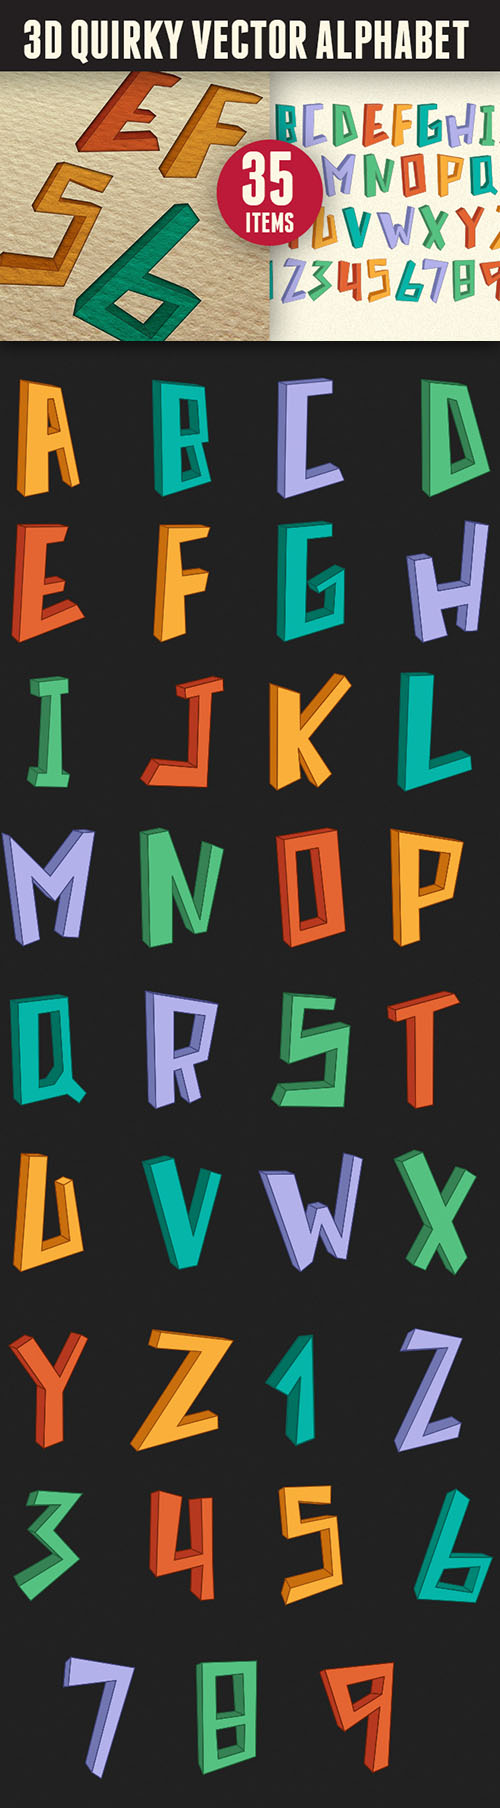 3D Quirky Vector Alphabet Illustration